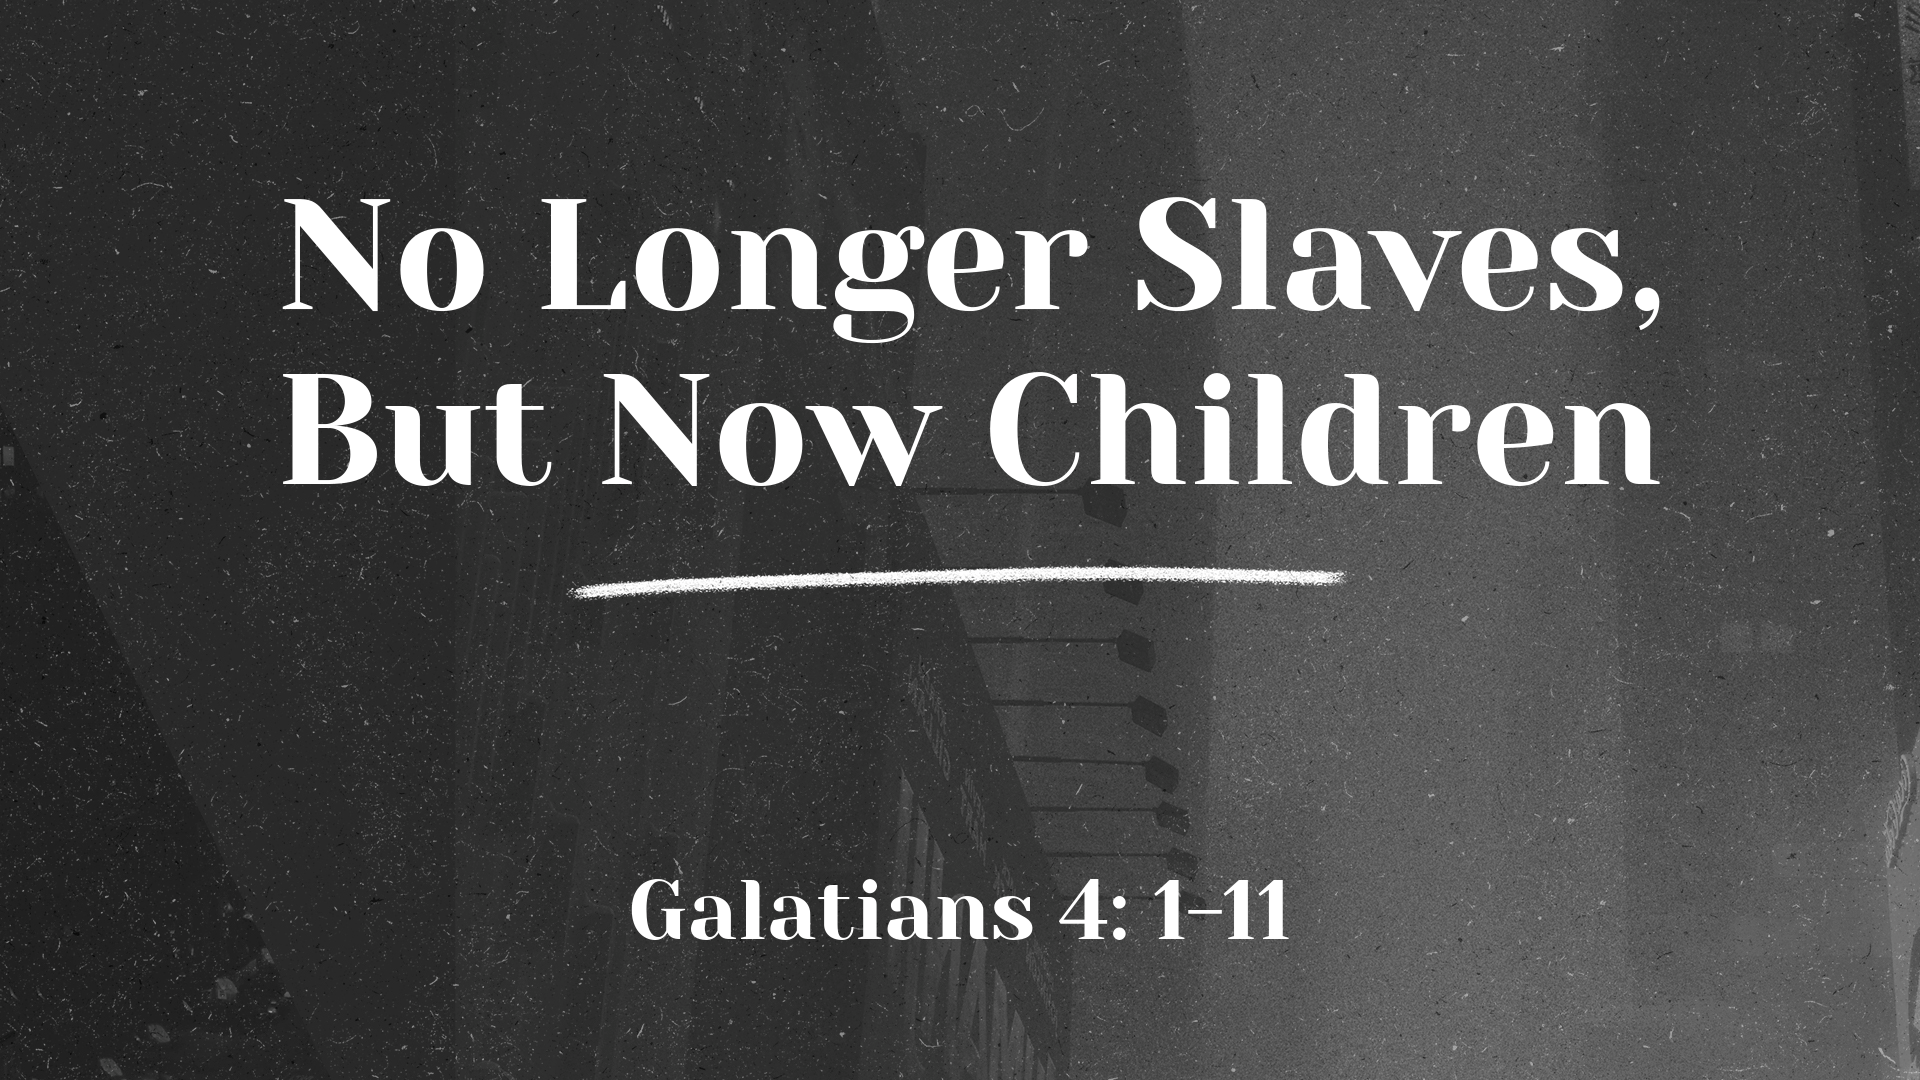 Oct 31, 2021 - No Longer Slaves, But Now Children  (Video) - Galatians 4: 1-11